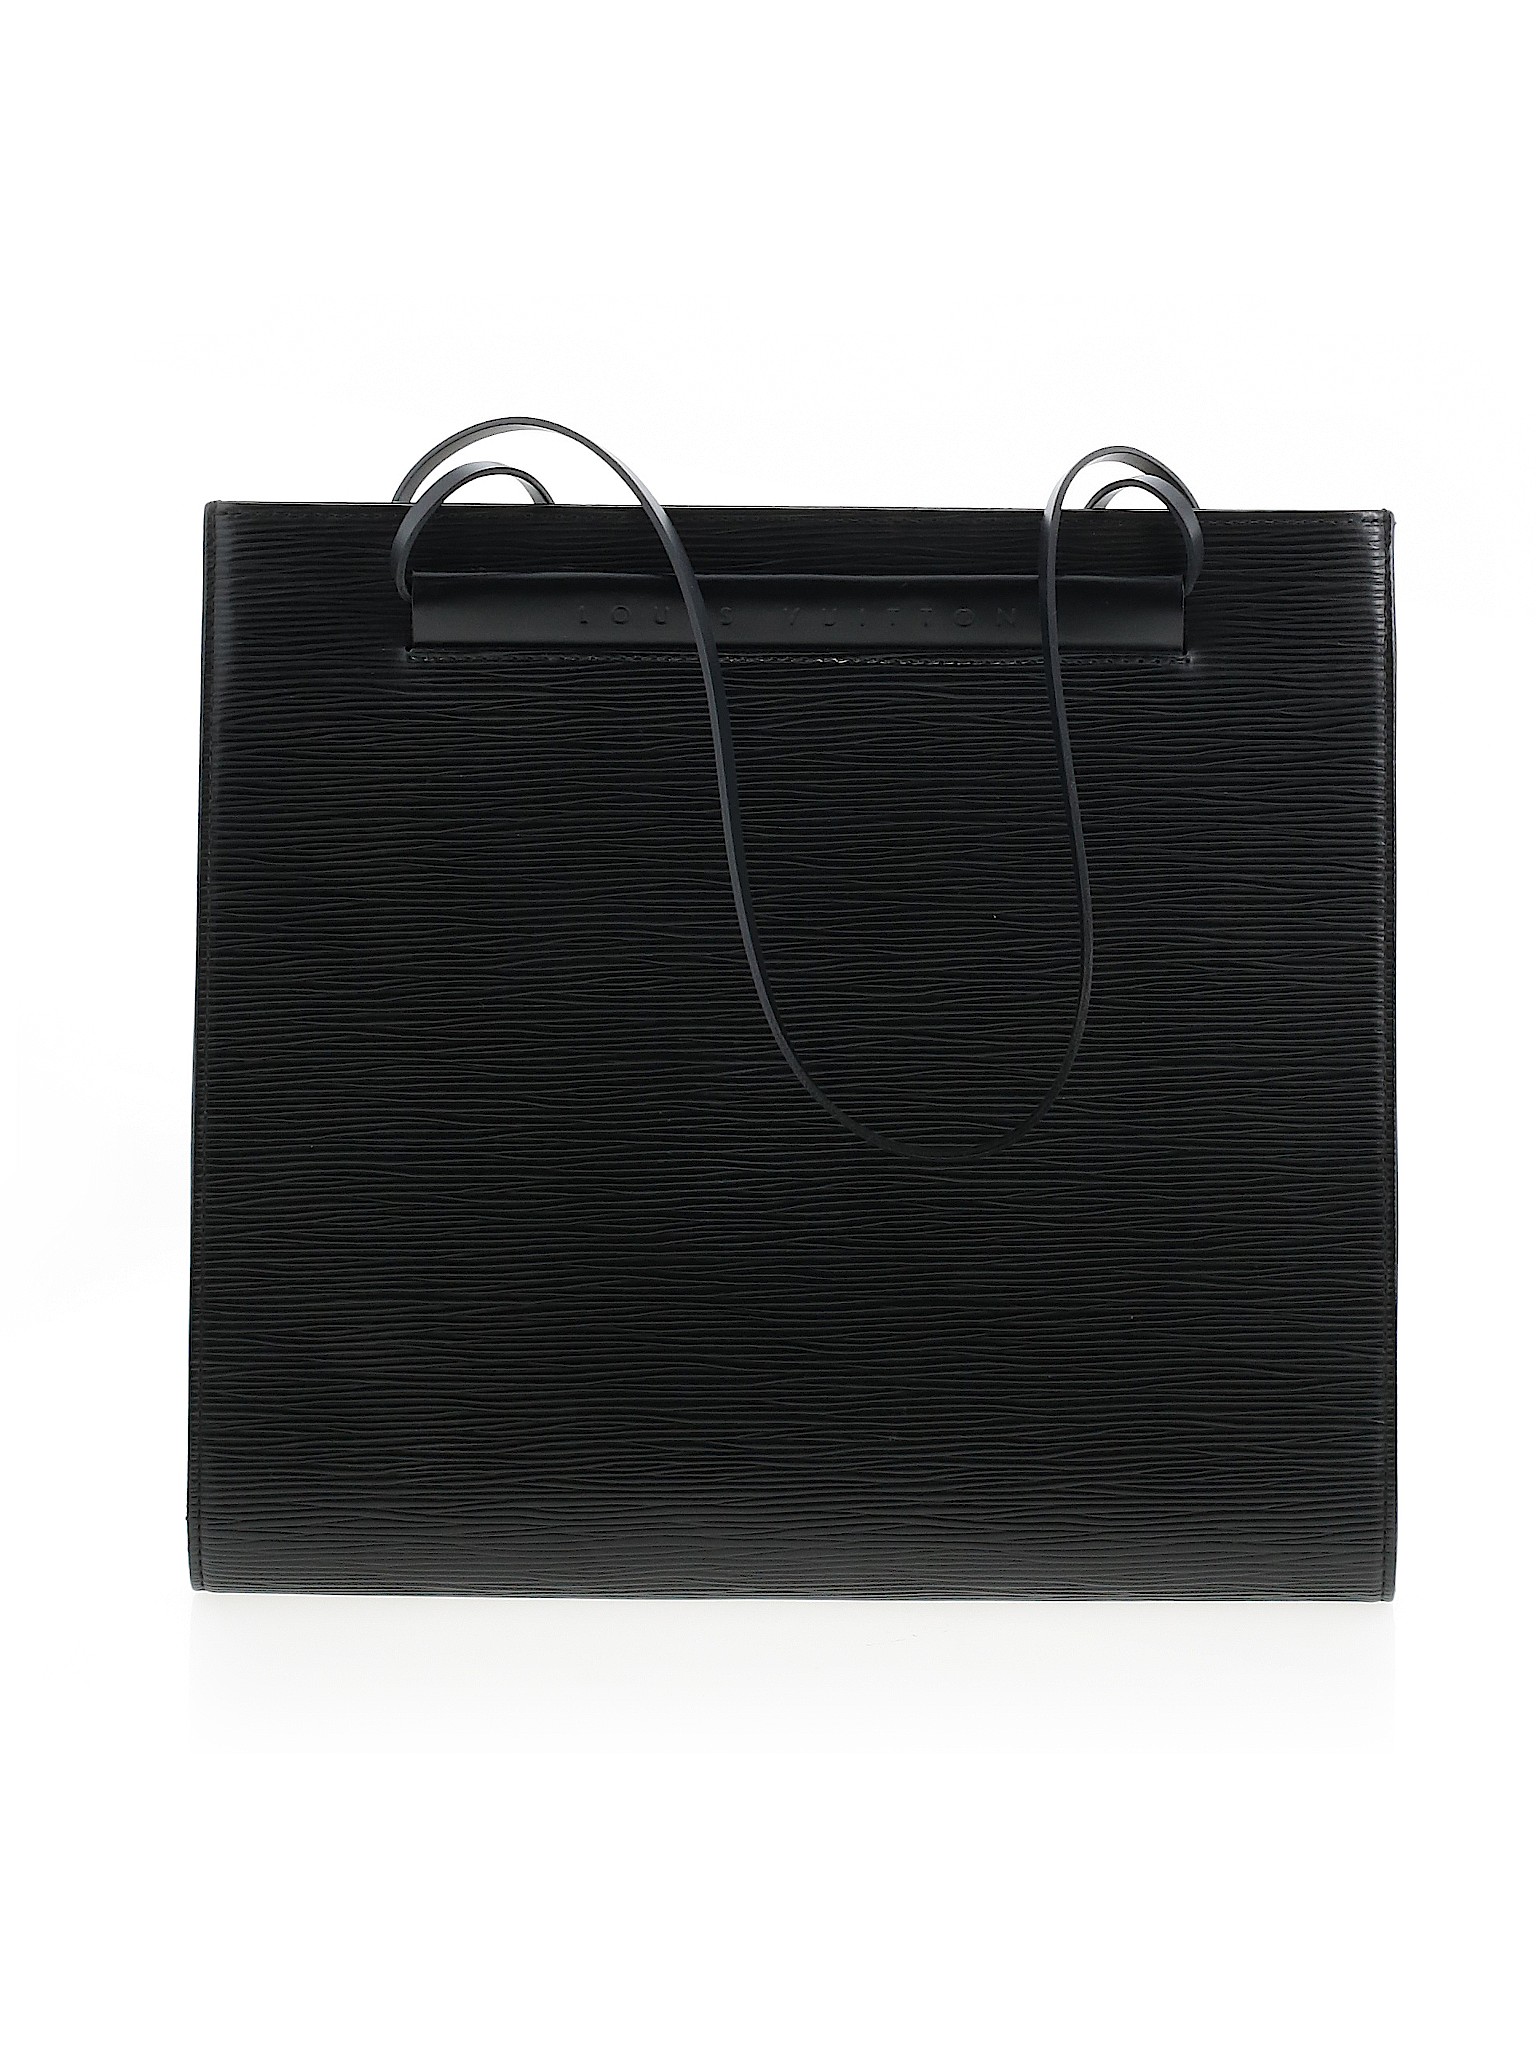 Louis Vuitton Women Black Leather Shoulder Bag One Size | eBay